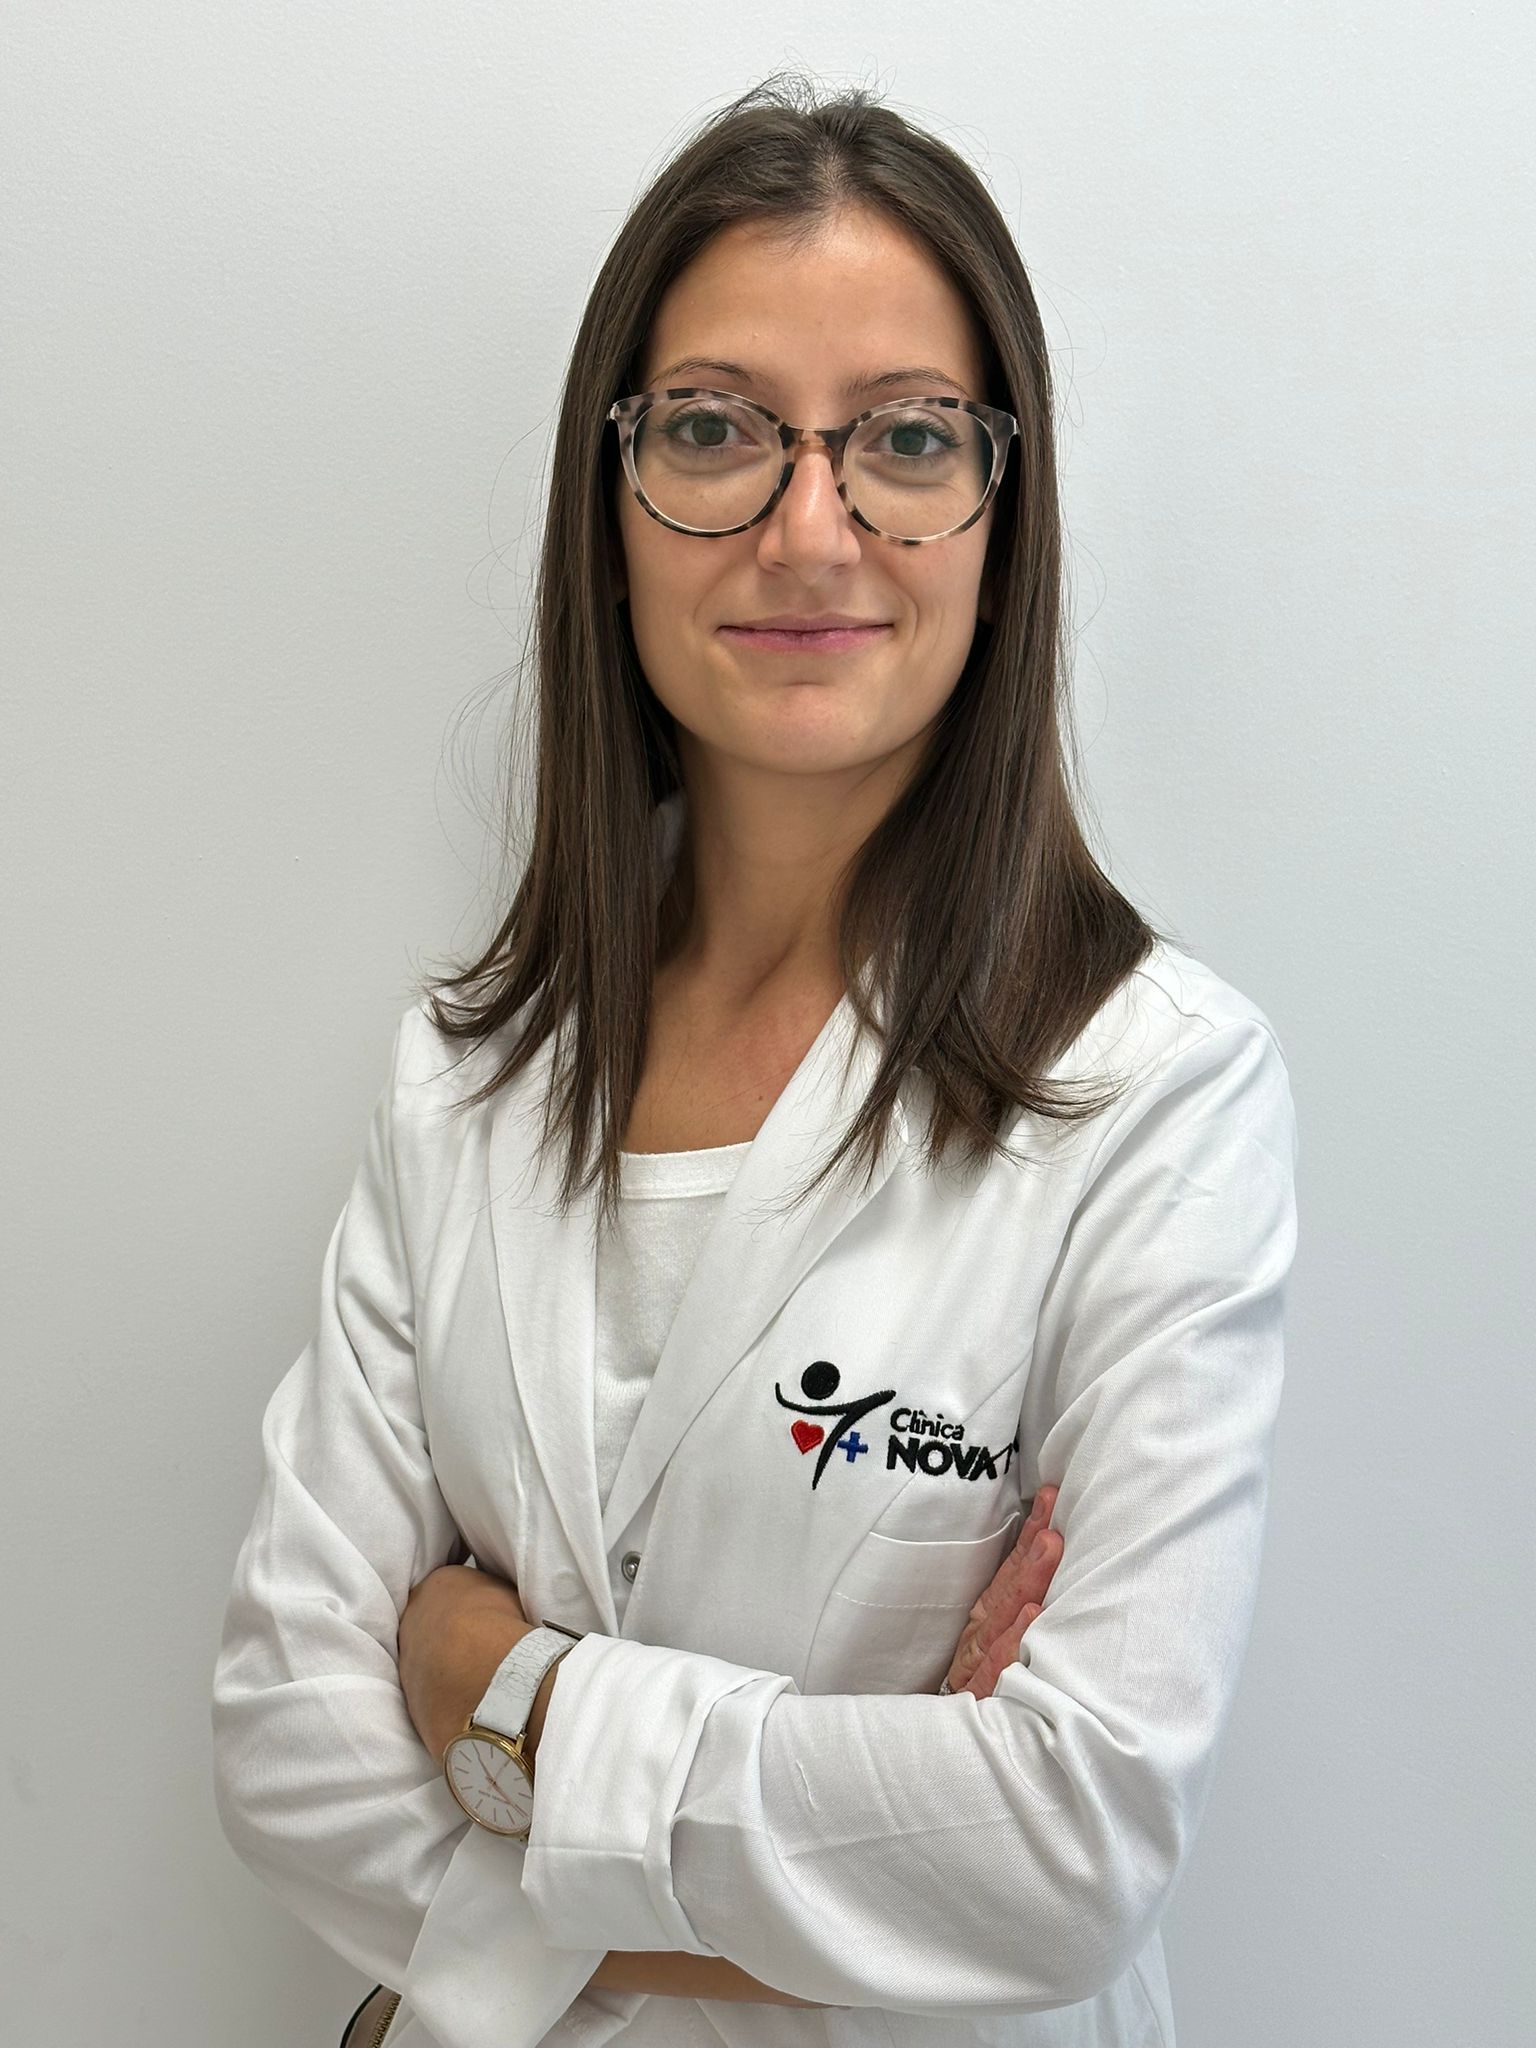 Claudia Cefalù